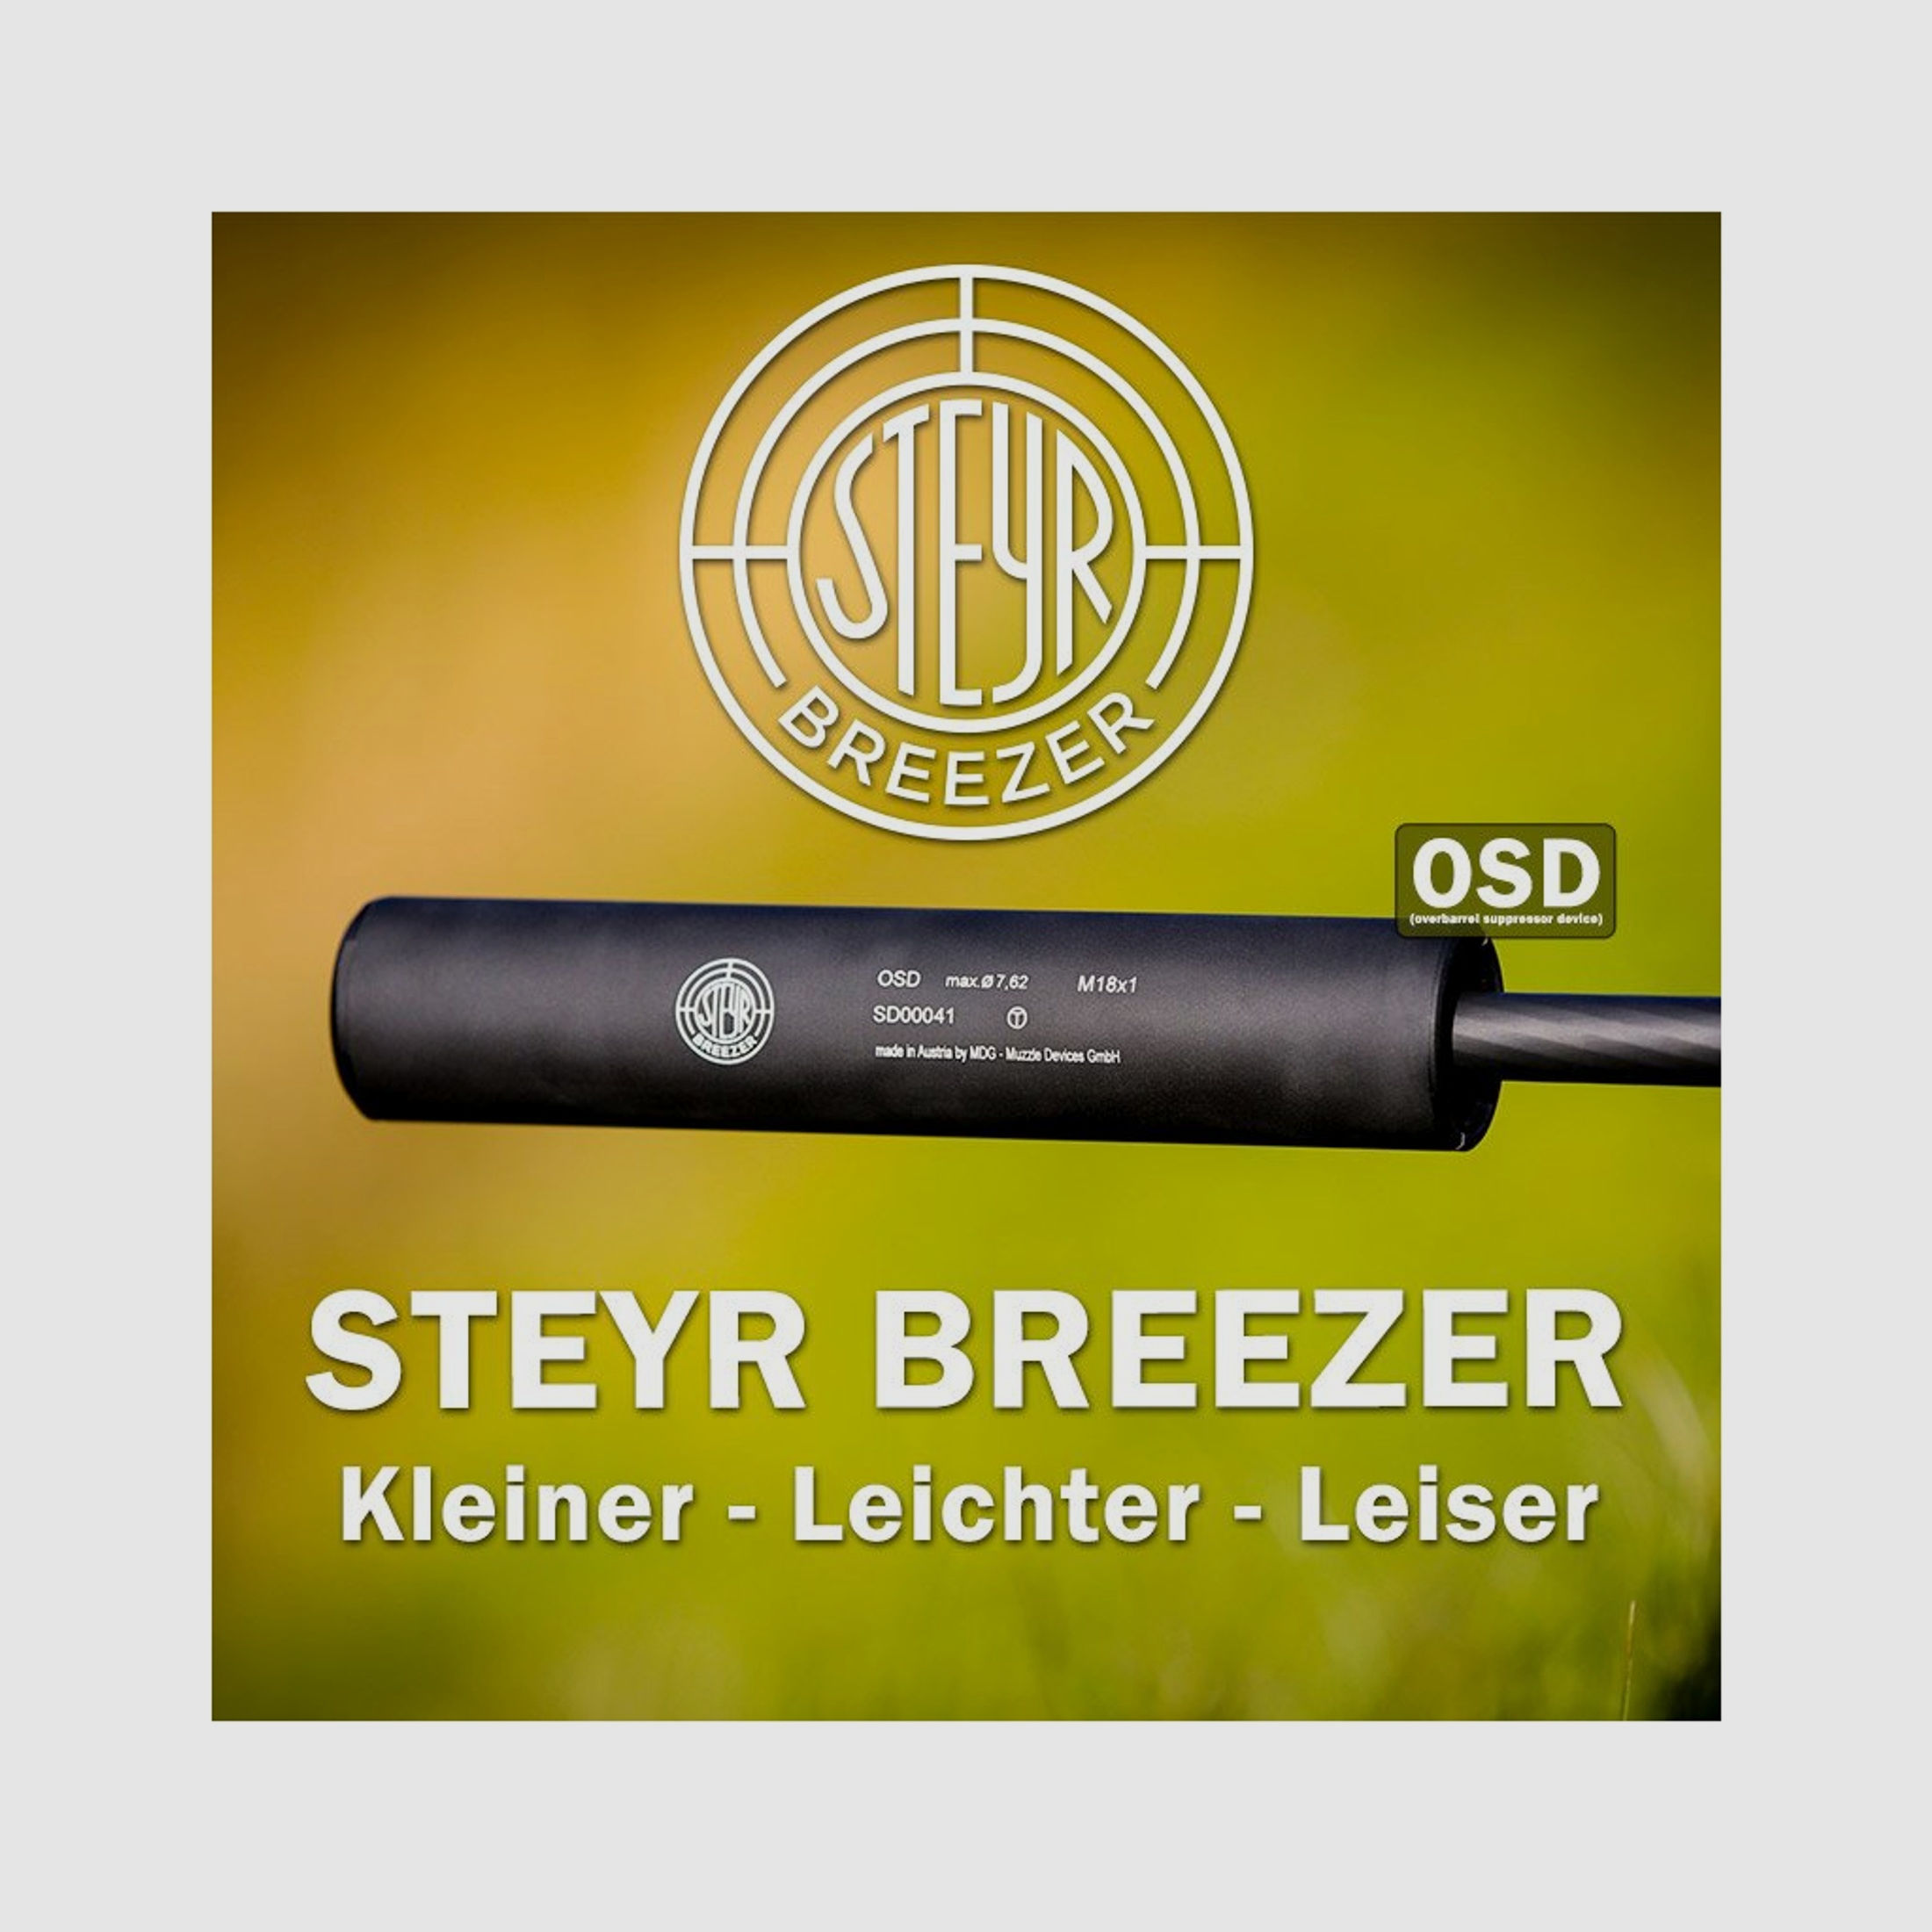 STEYR Breezer OSD